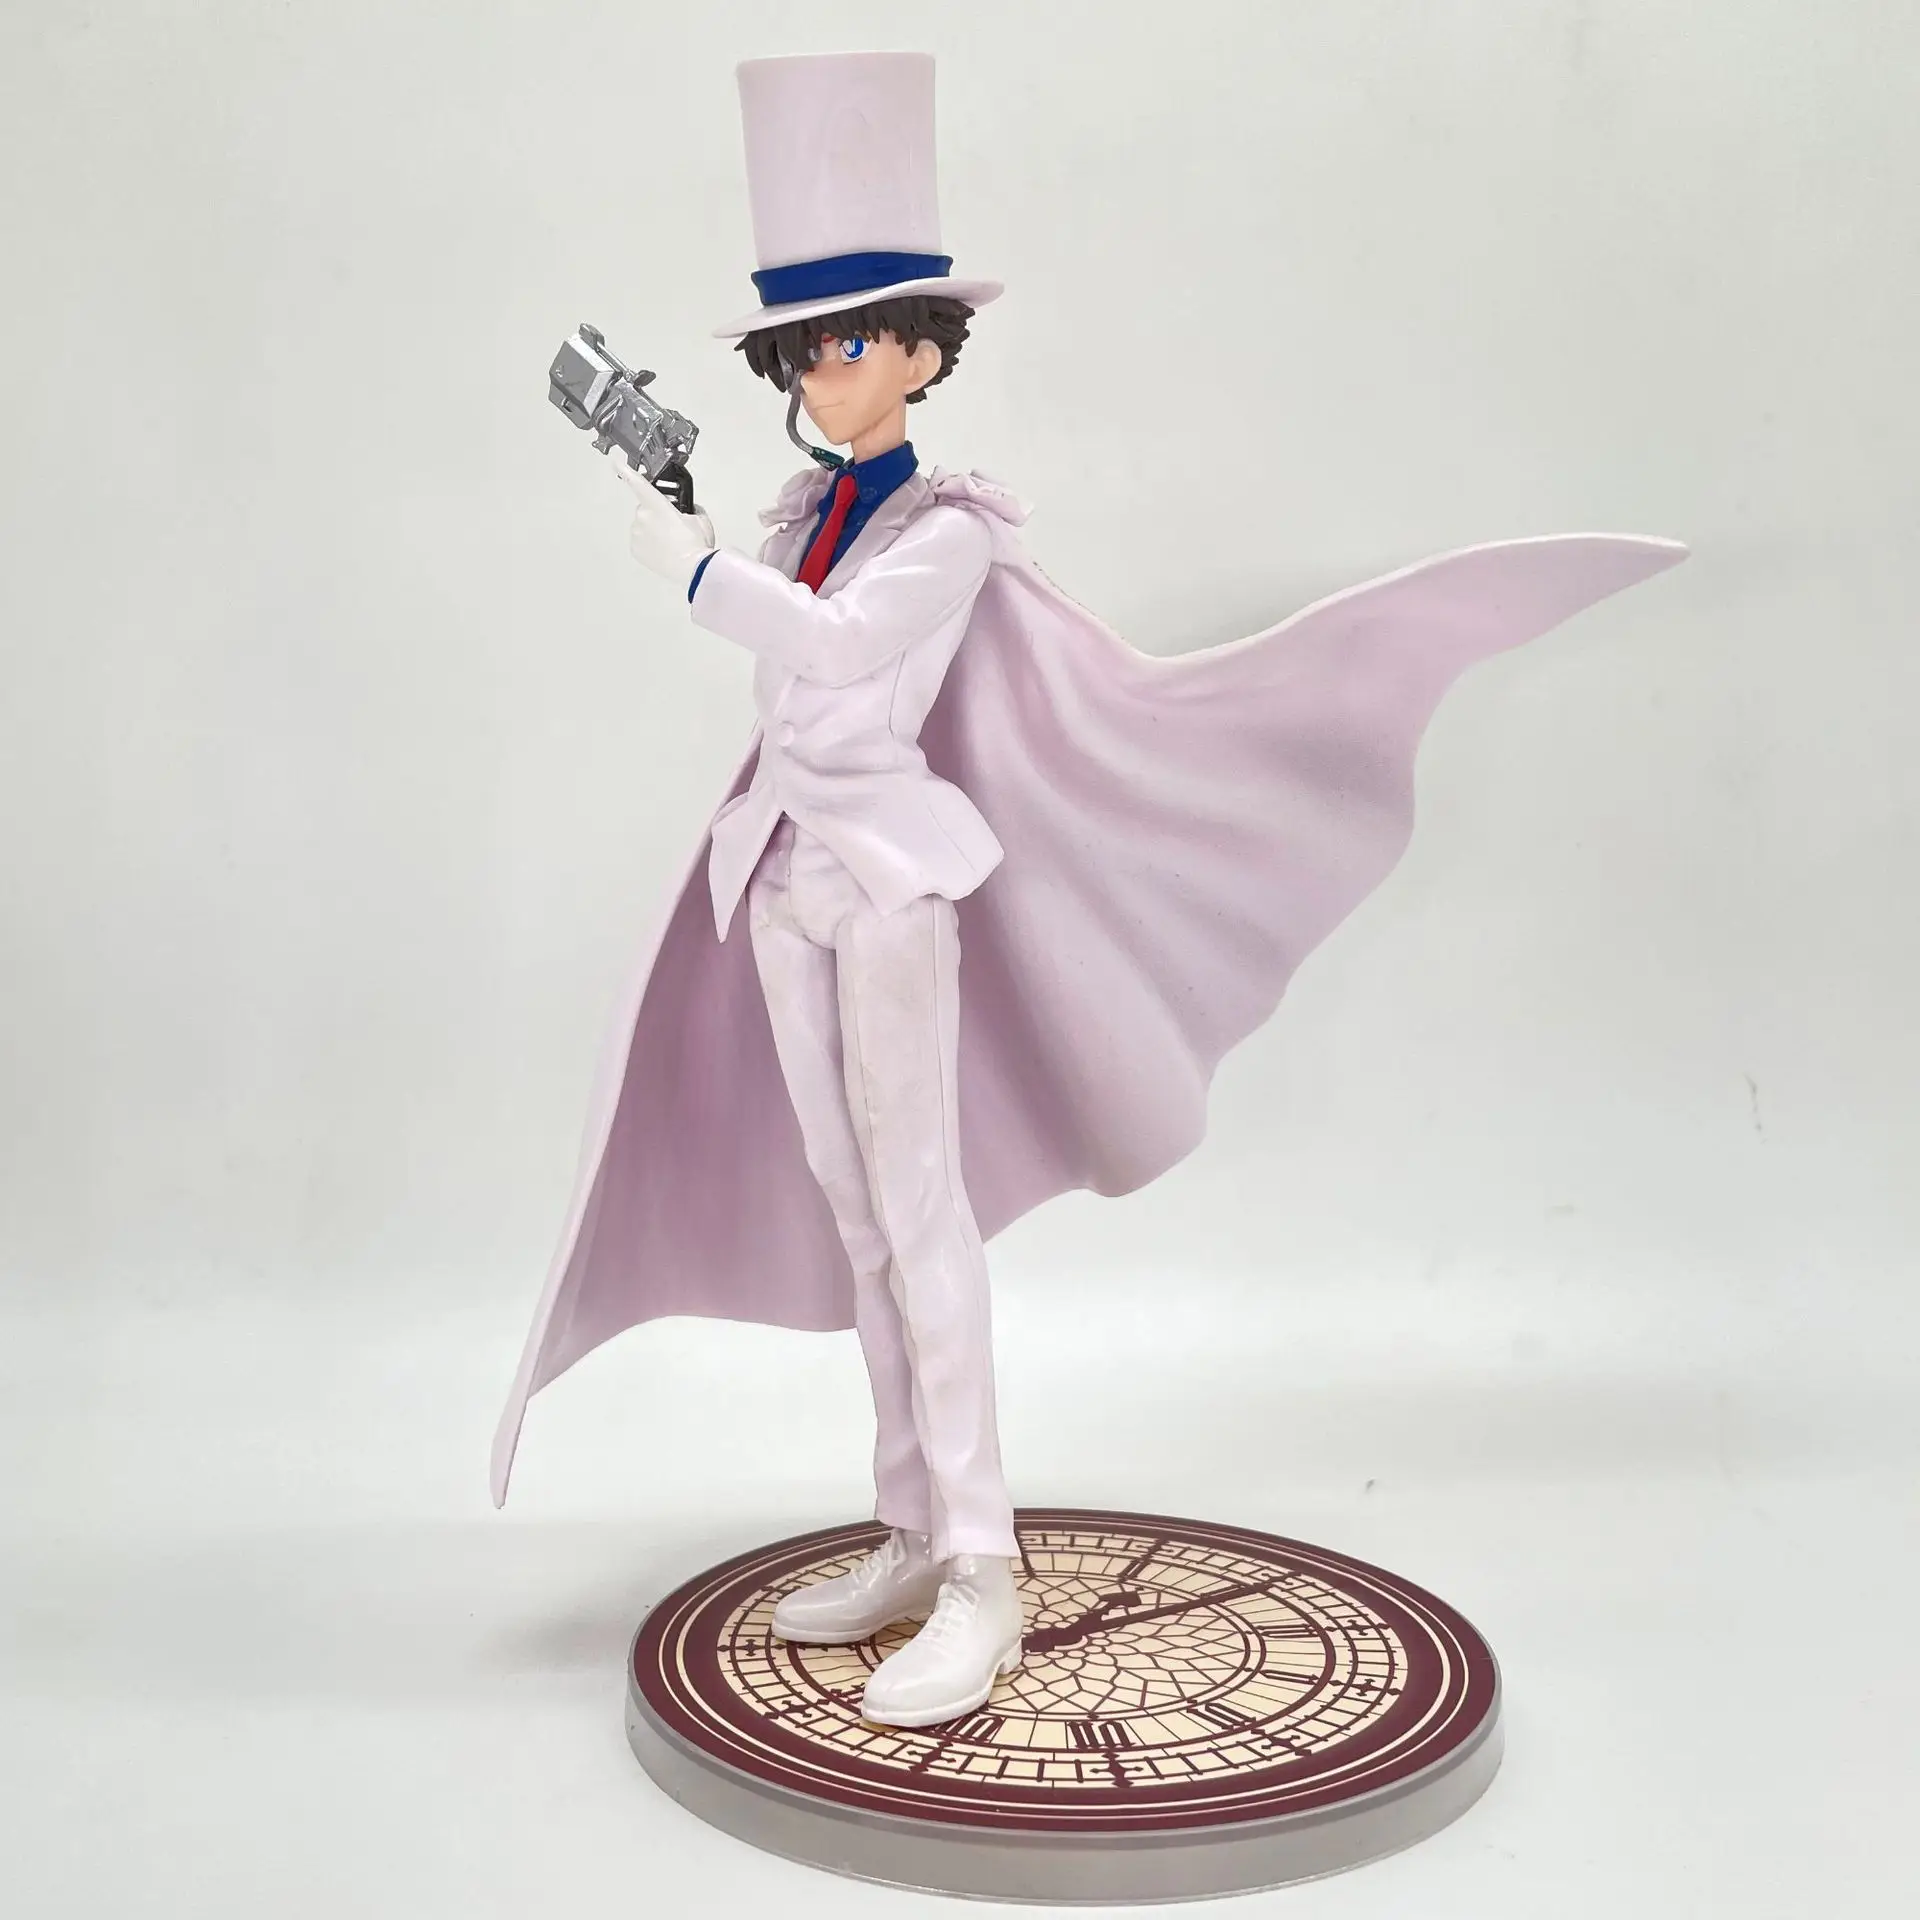 

24cm Conan Kuroba Kaito Anime Action Figure PVC toys Collection figures for friends gifts